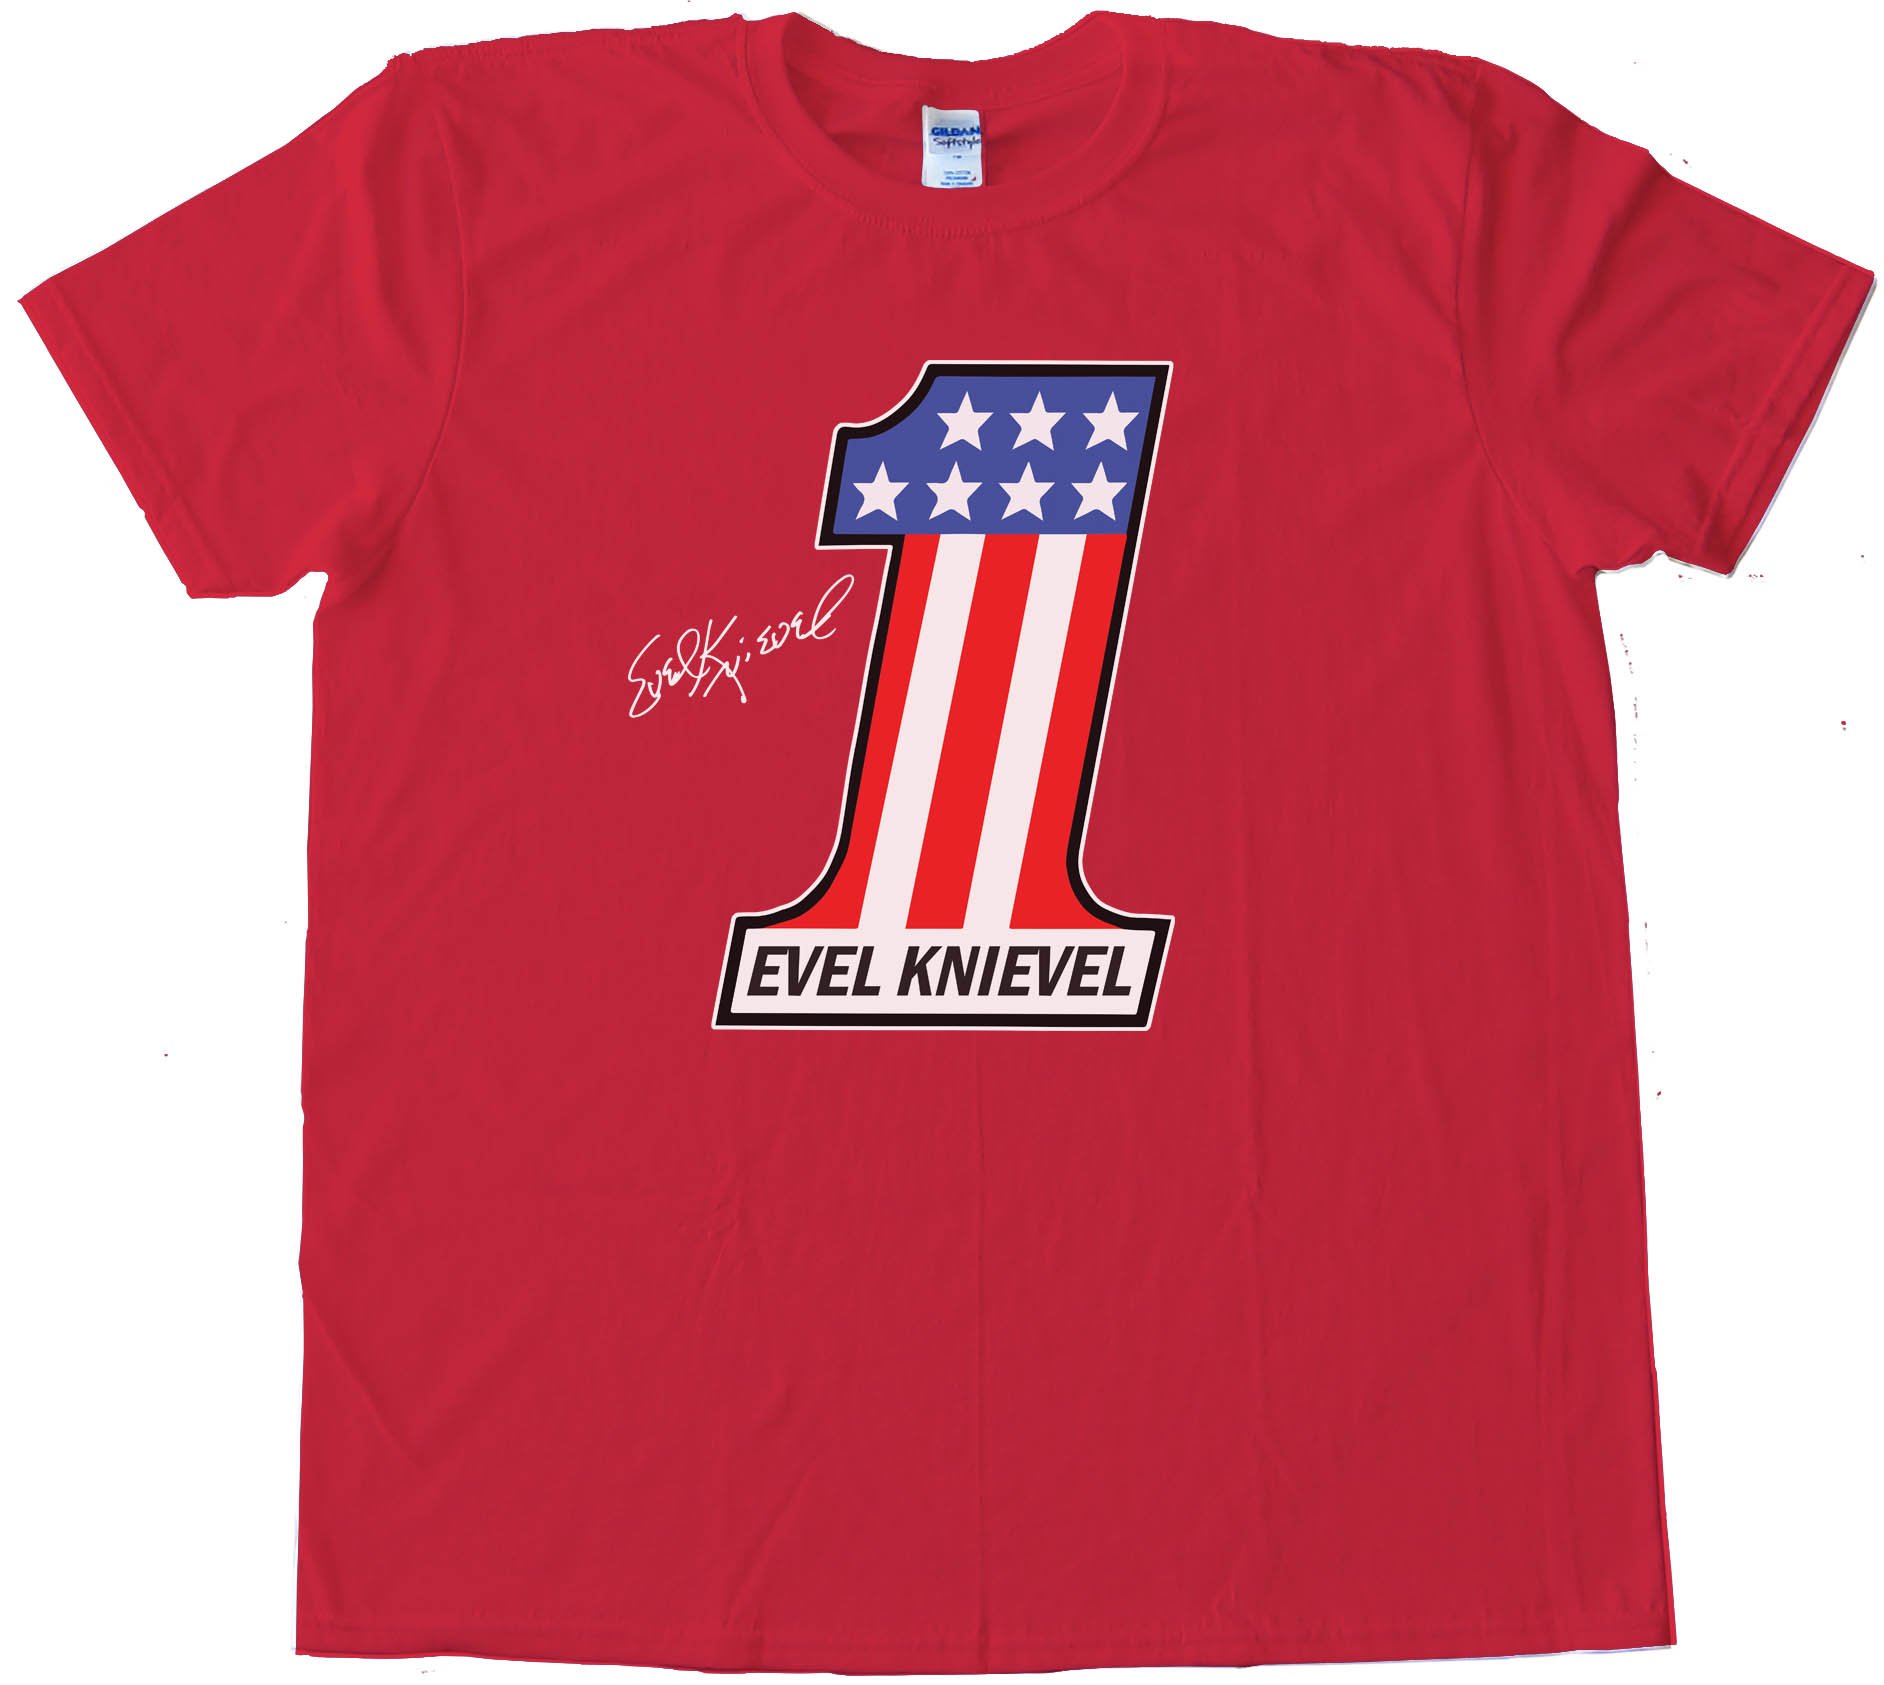 Evel Knievel The Greatest American Stuntman - Tee Shirt